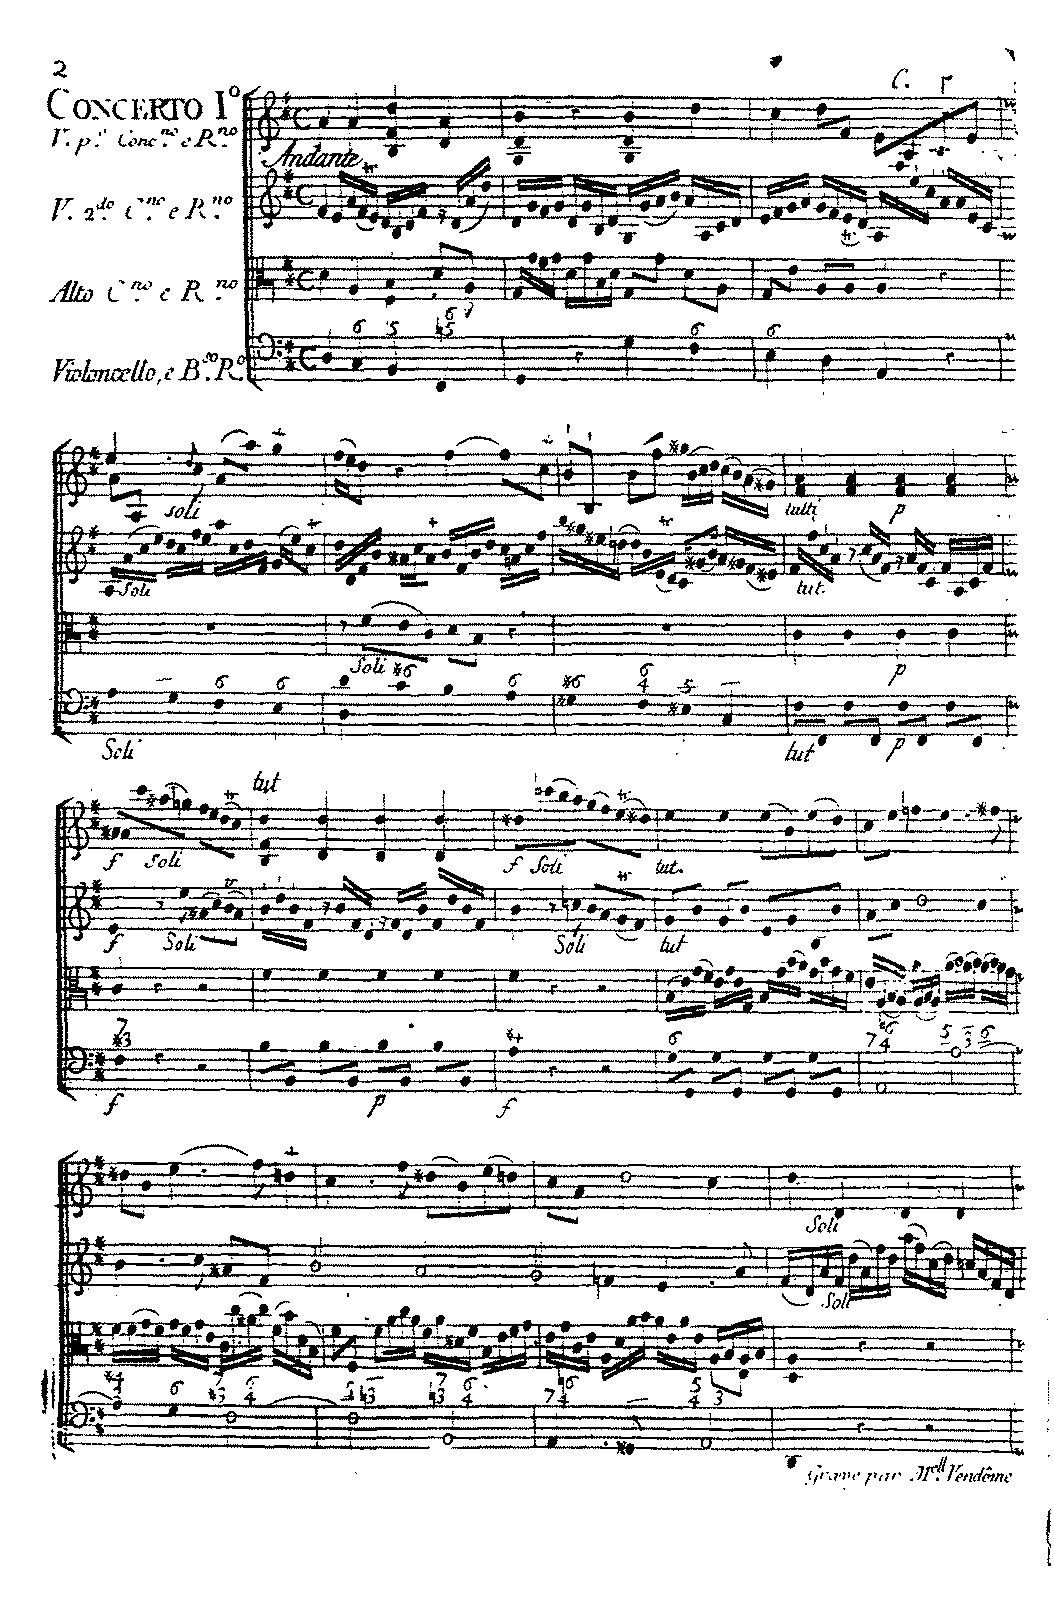 Concerto Grosso in D major, H.79 (Geminiani, Francesco) - IMSLP